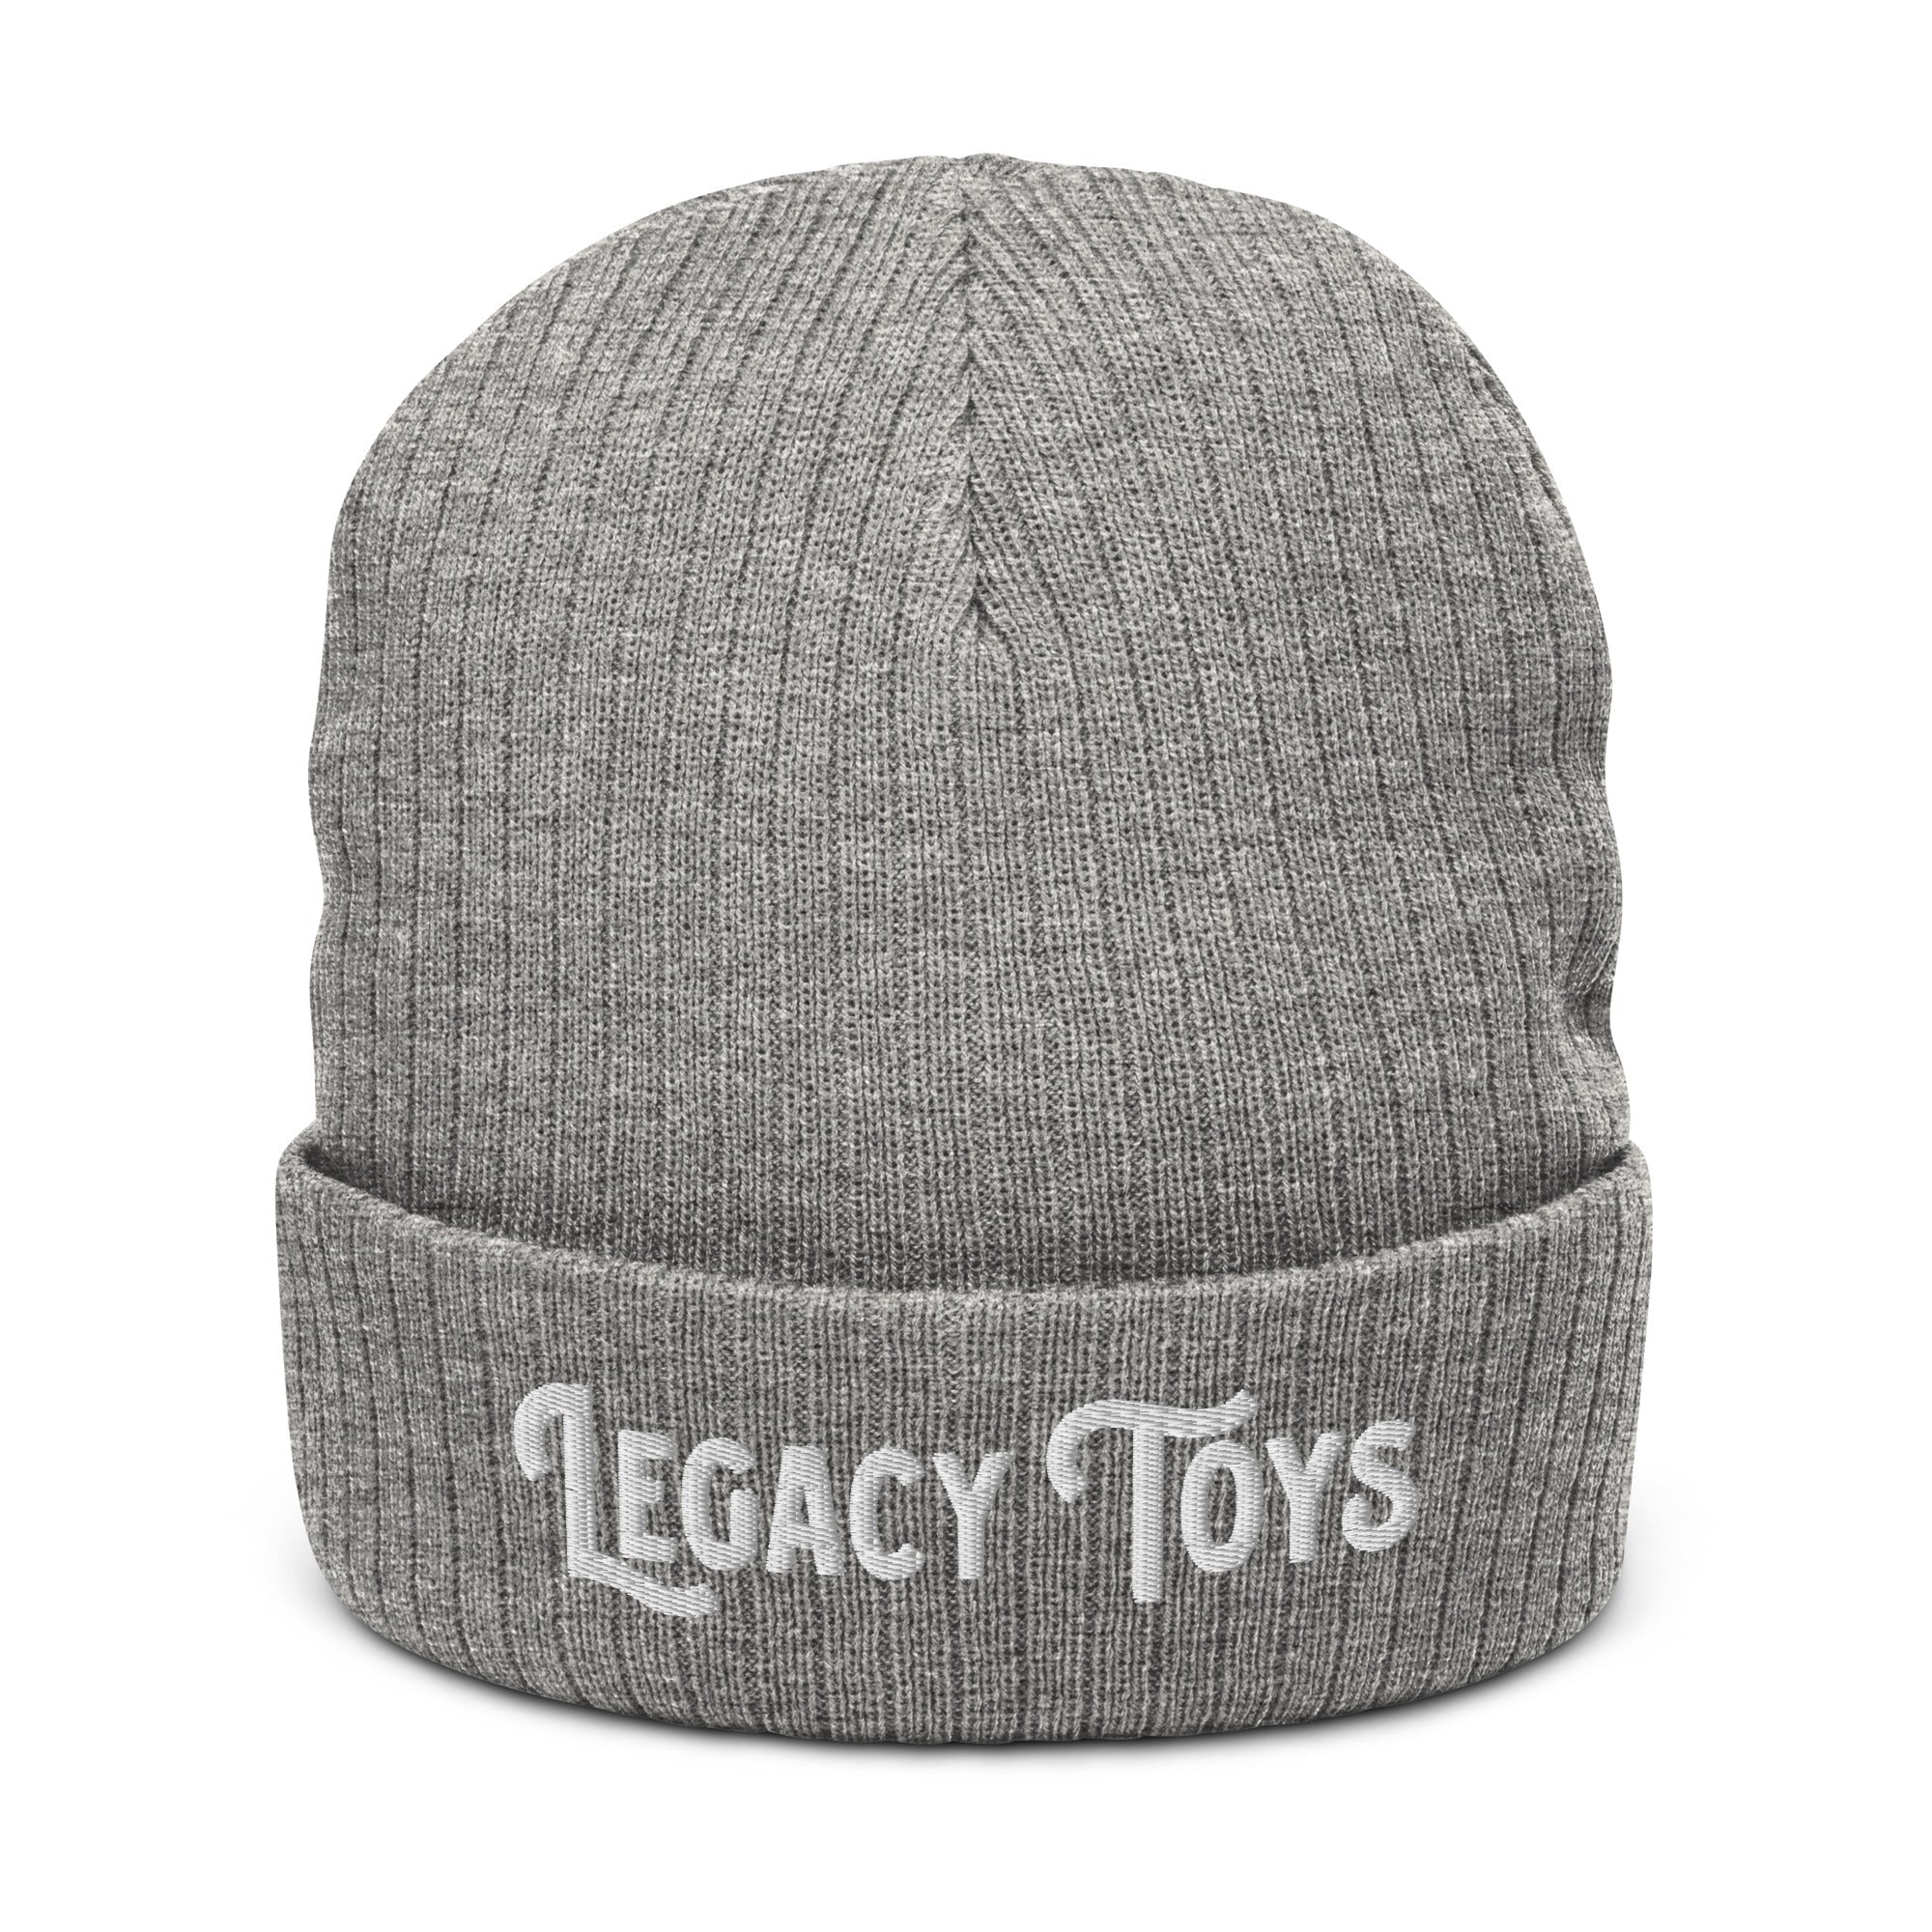 Legacy Toys-Legacy Toys Ribbed knit beanie-9339153_13239-Light Grey Melange-Legacy Toys